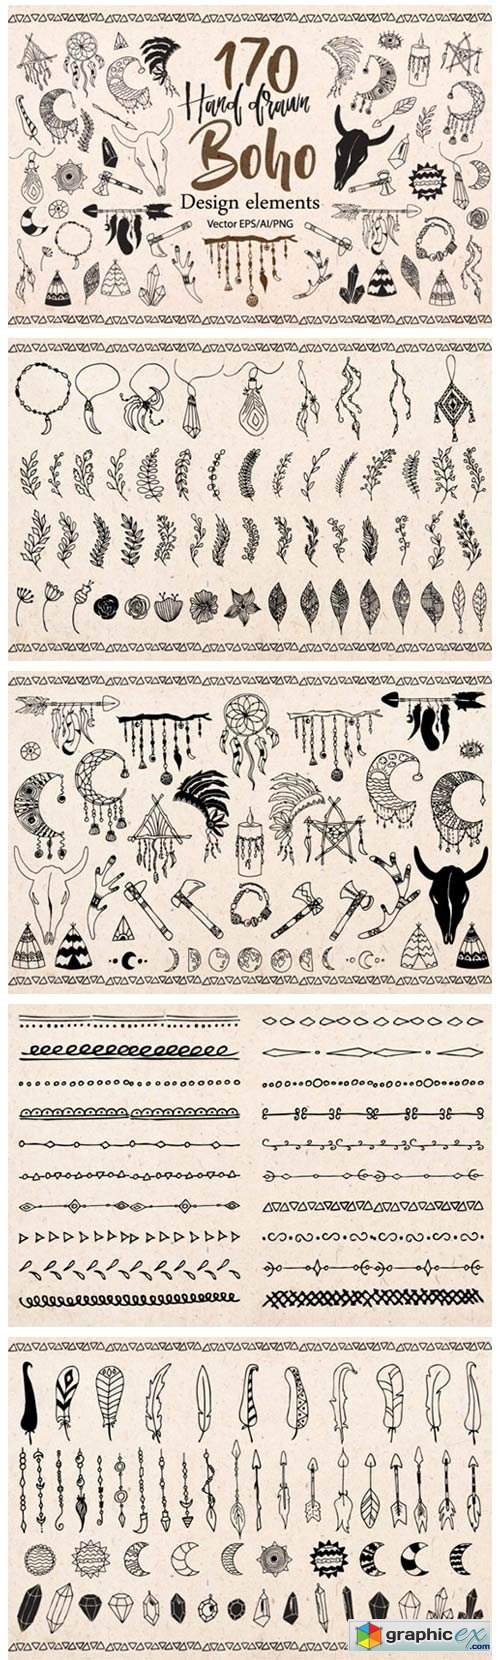 Boho Tribal Design Elements Clipart